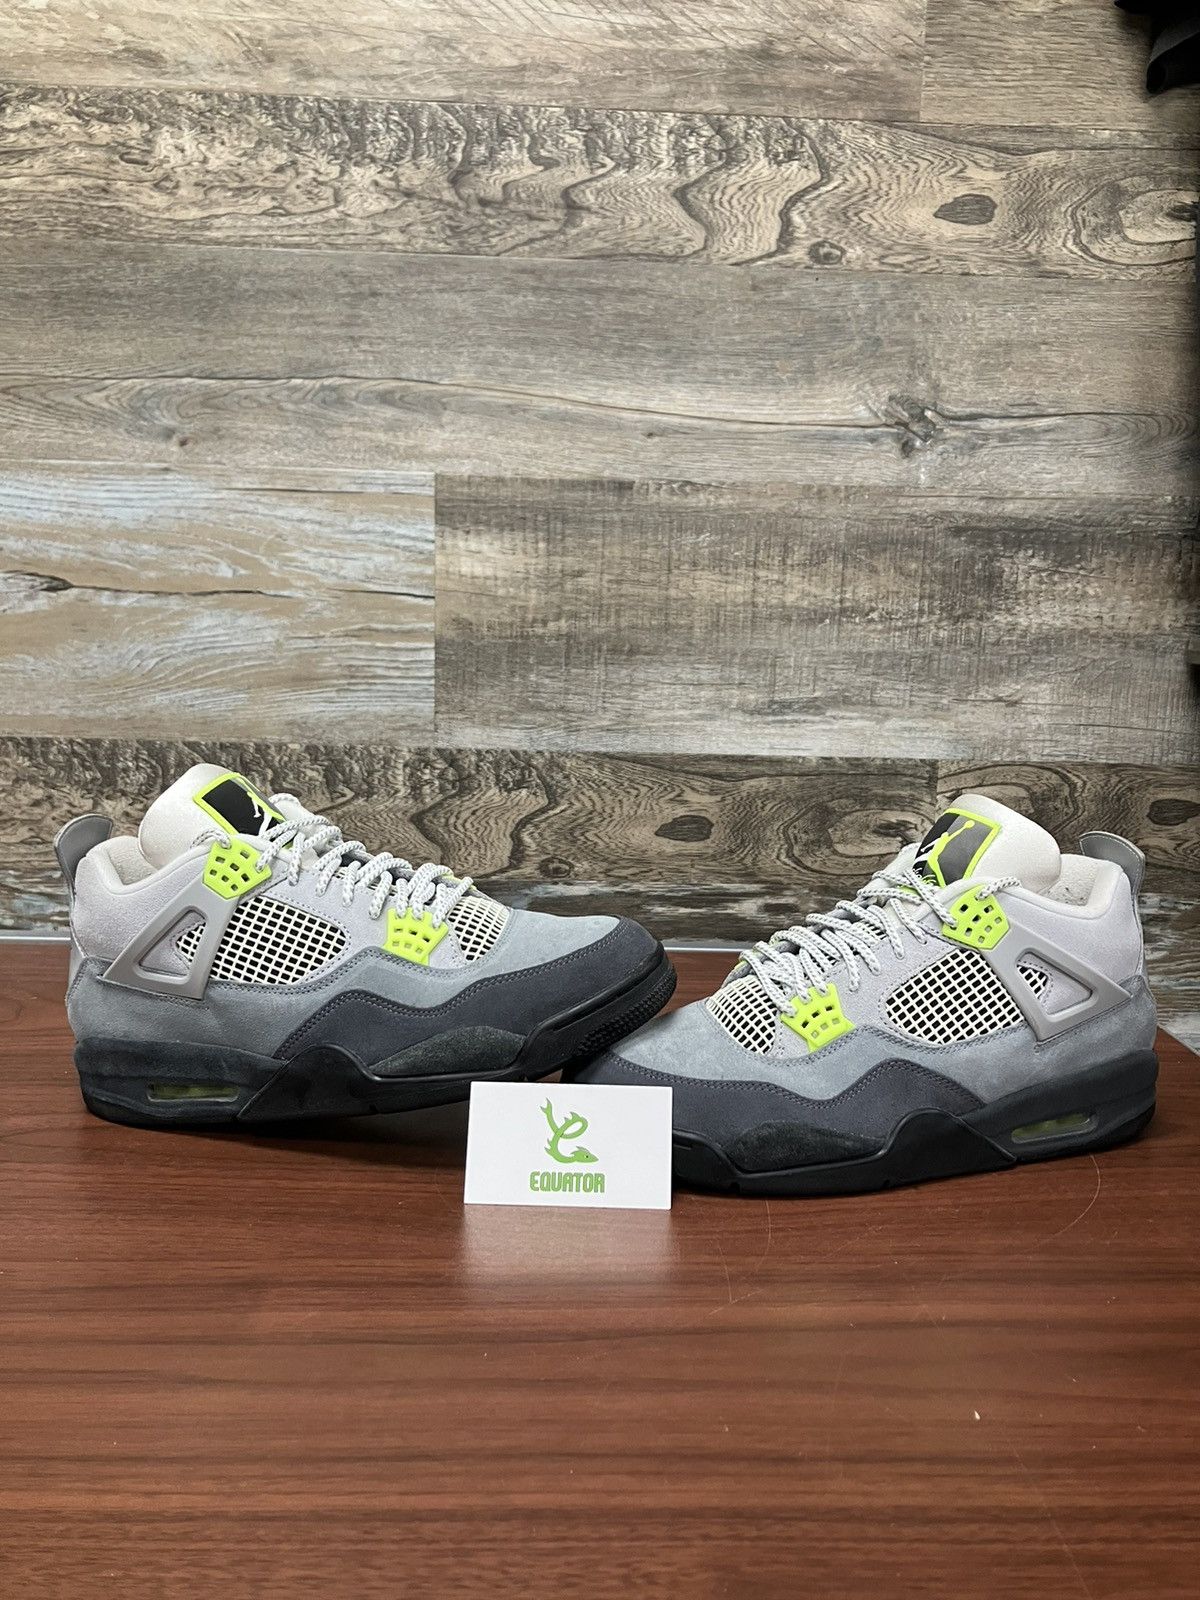 Nike Jordan 4 Retro SE 95 Neon Size 11 | Grailed